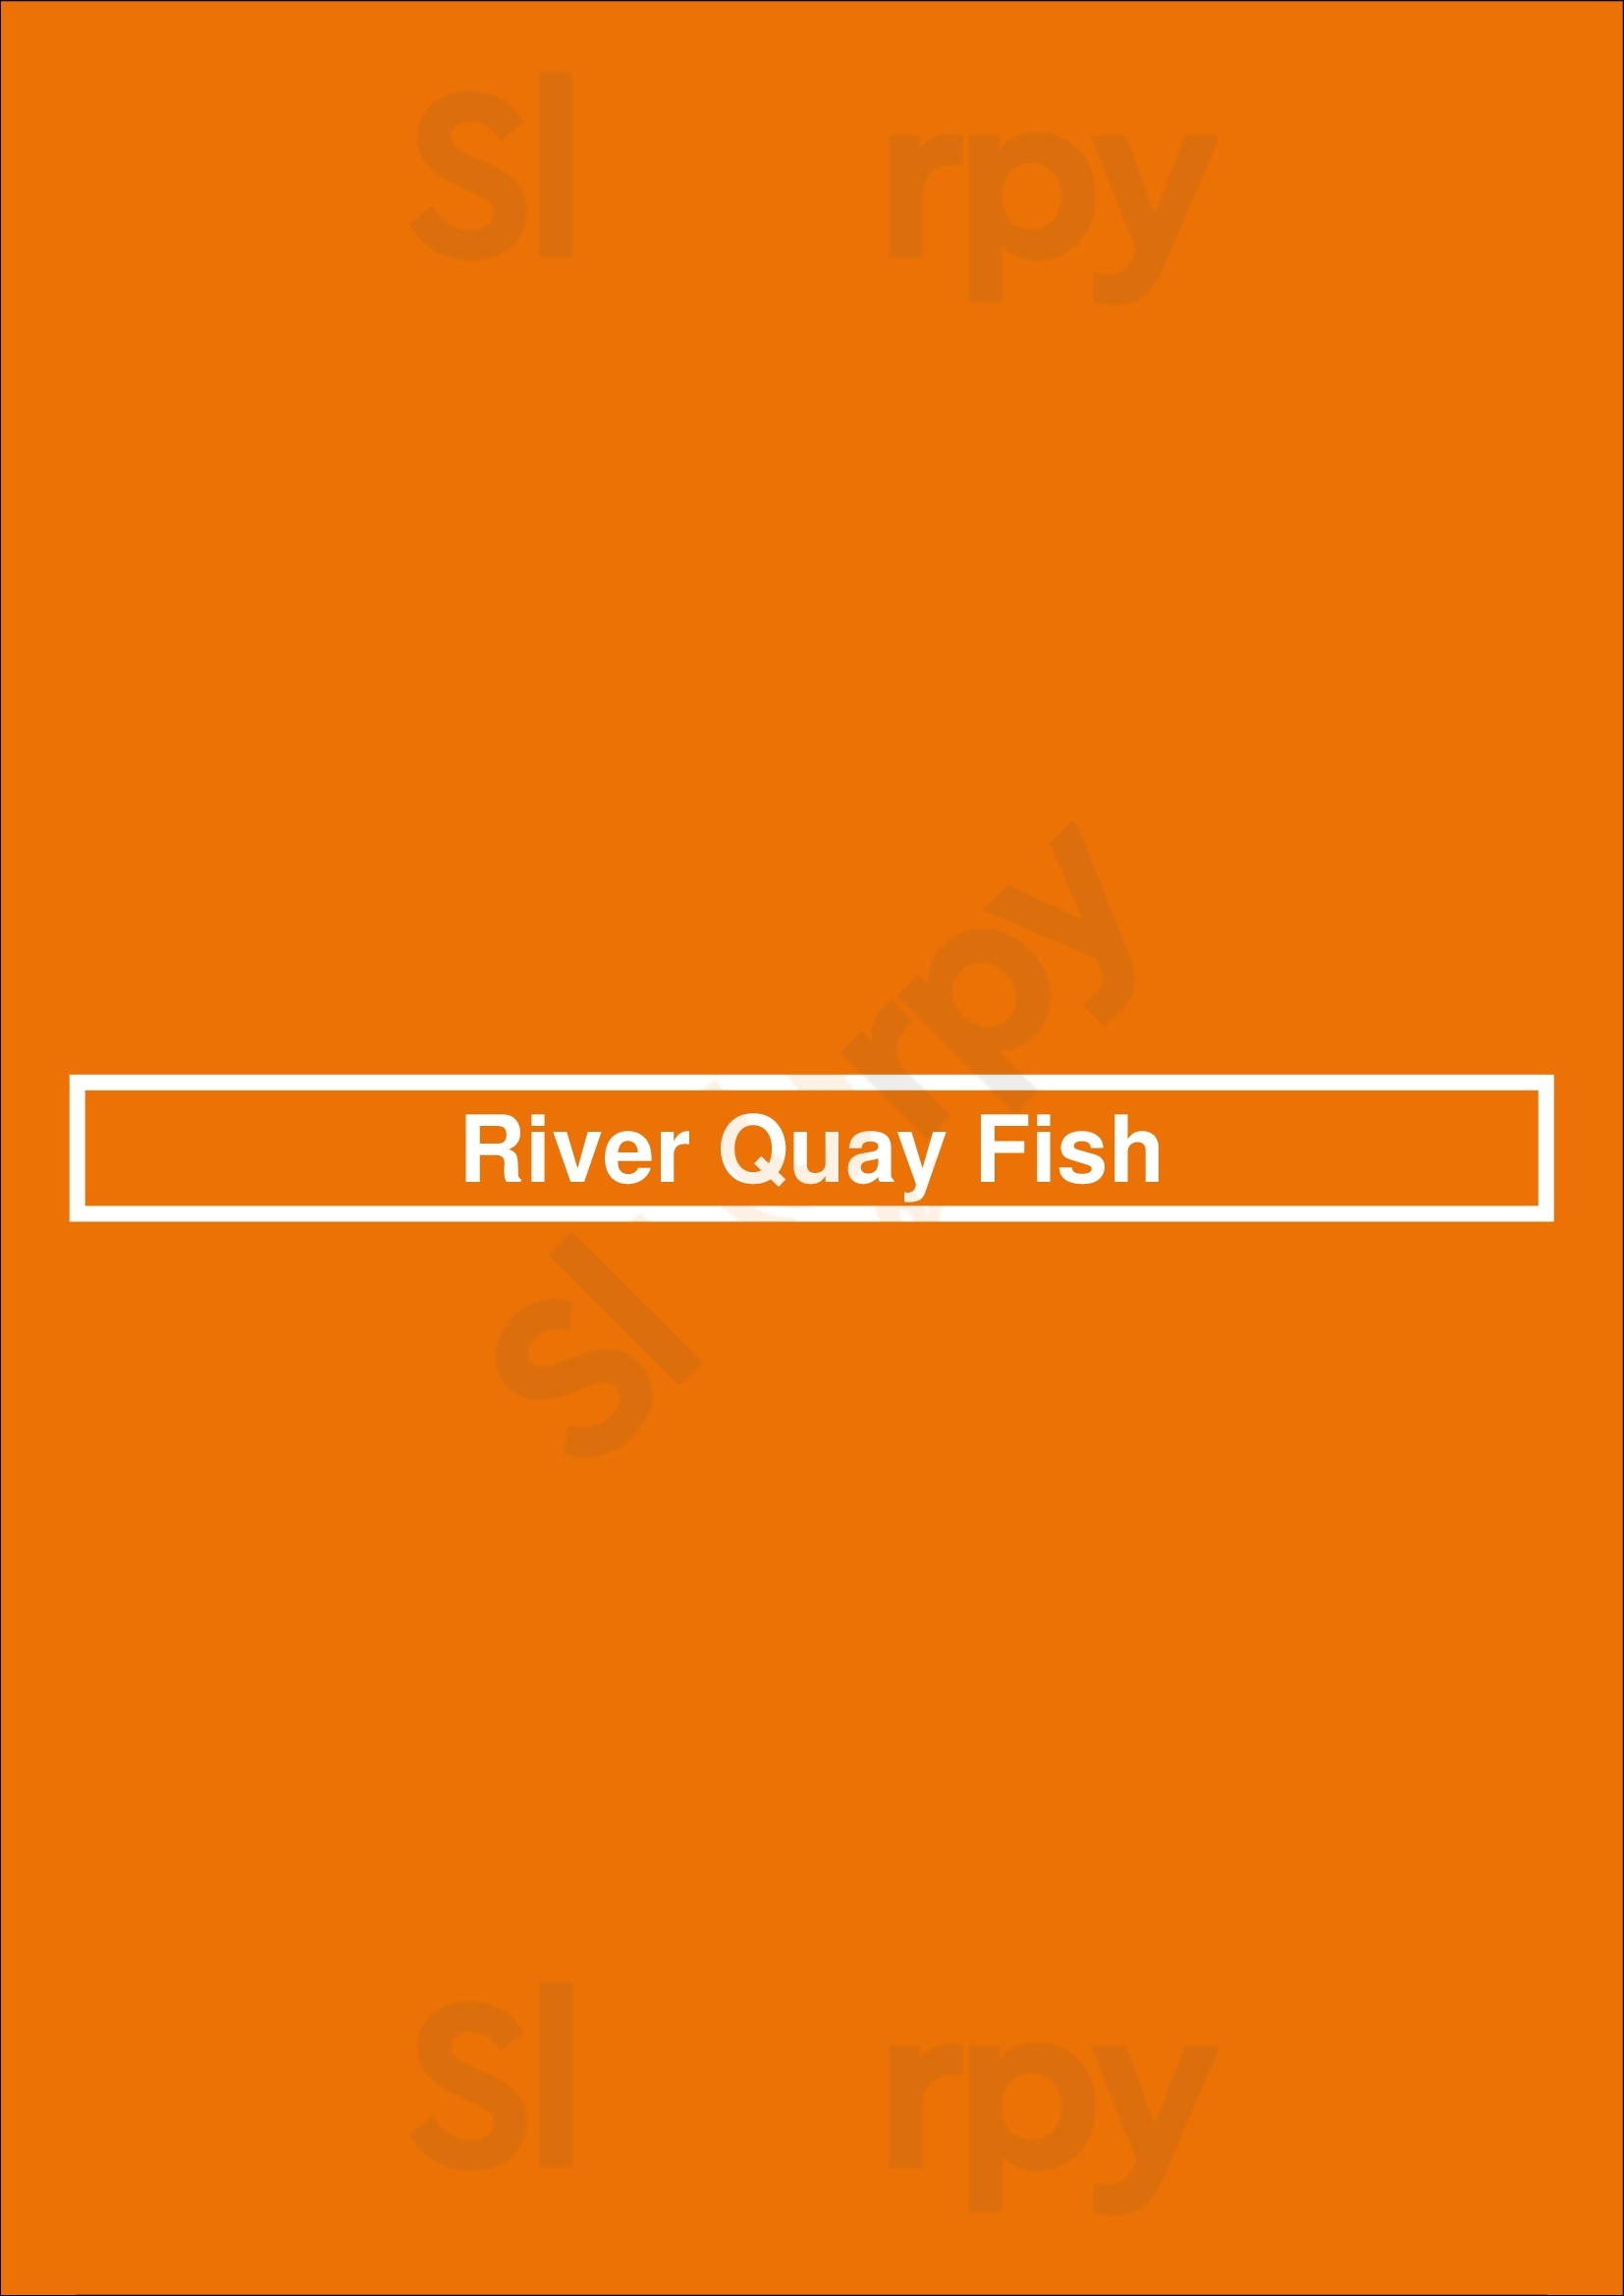 River Quay Fish Brisbane Menu - 1